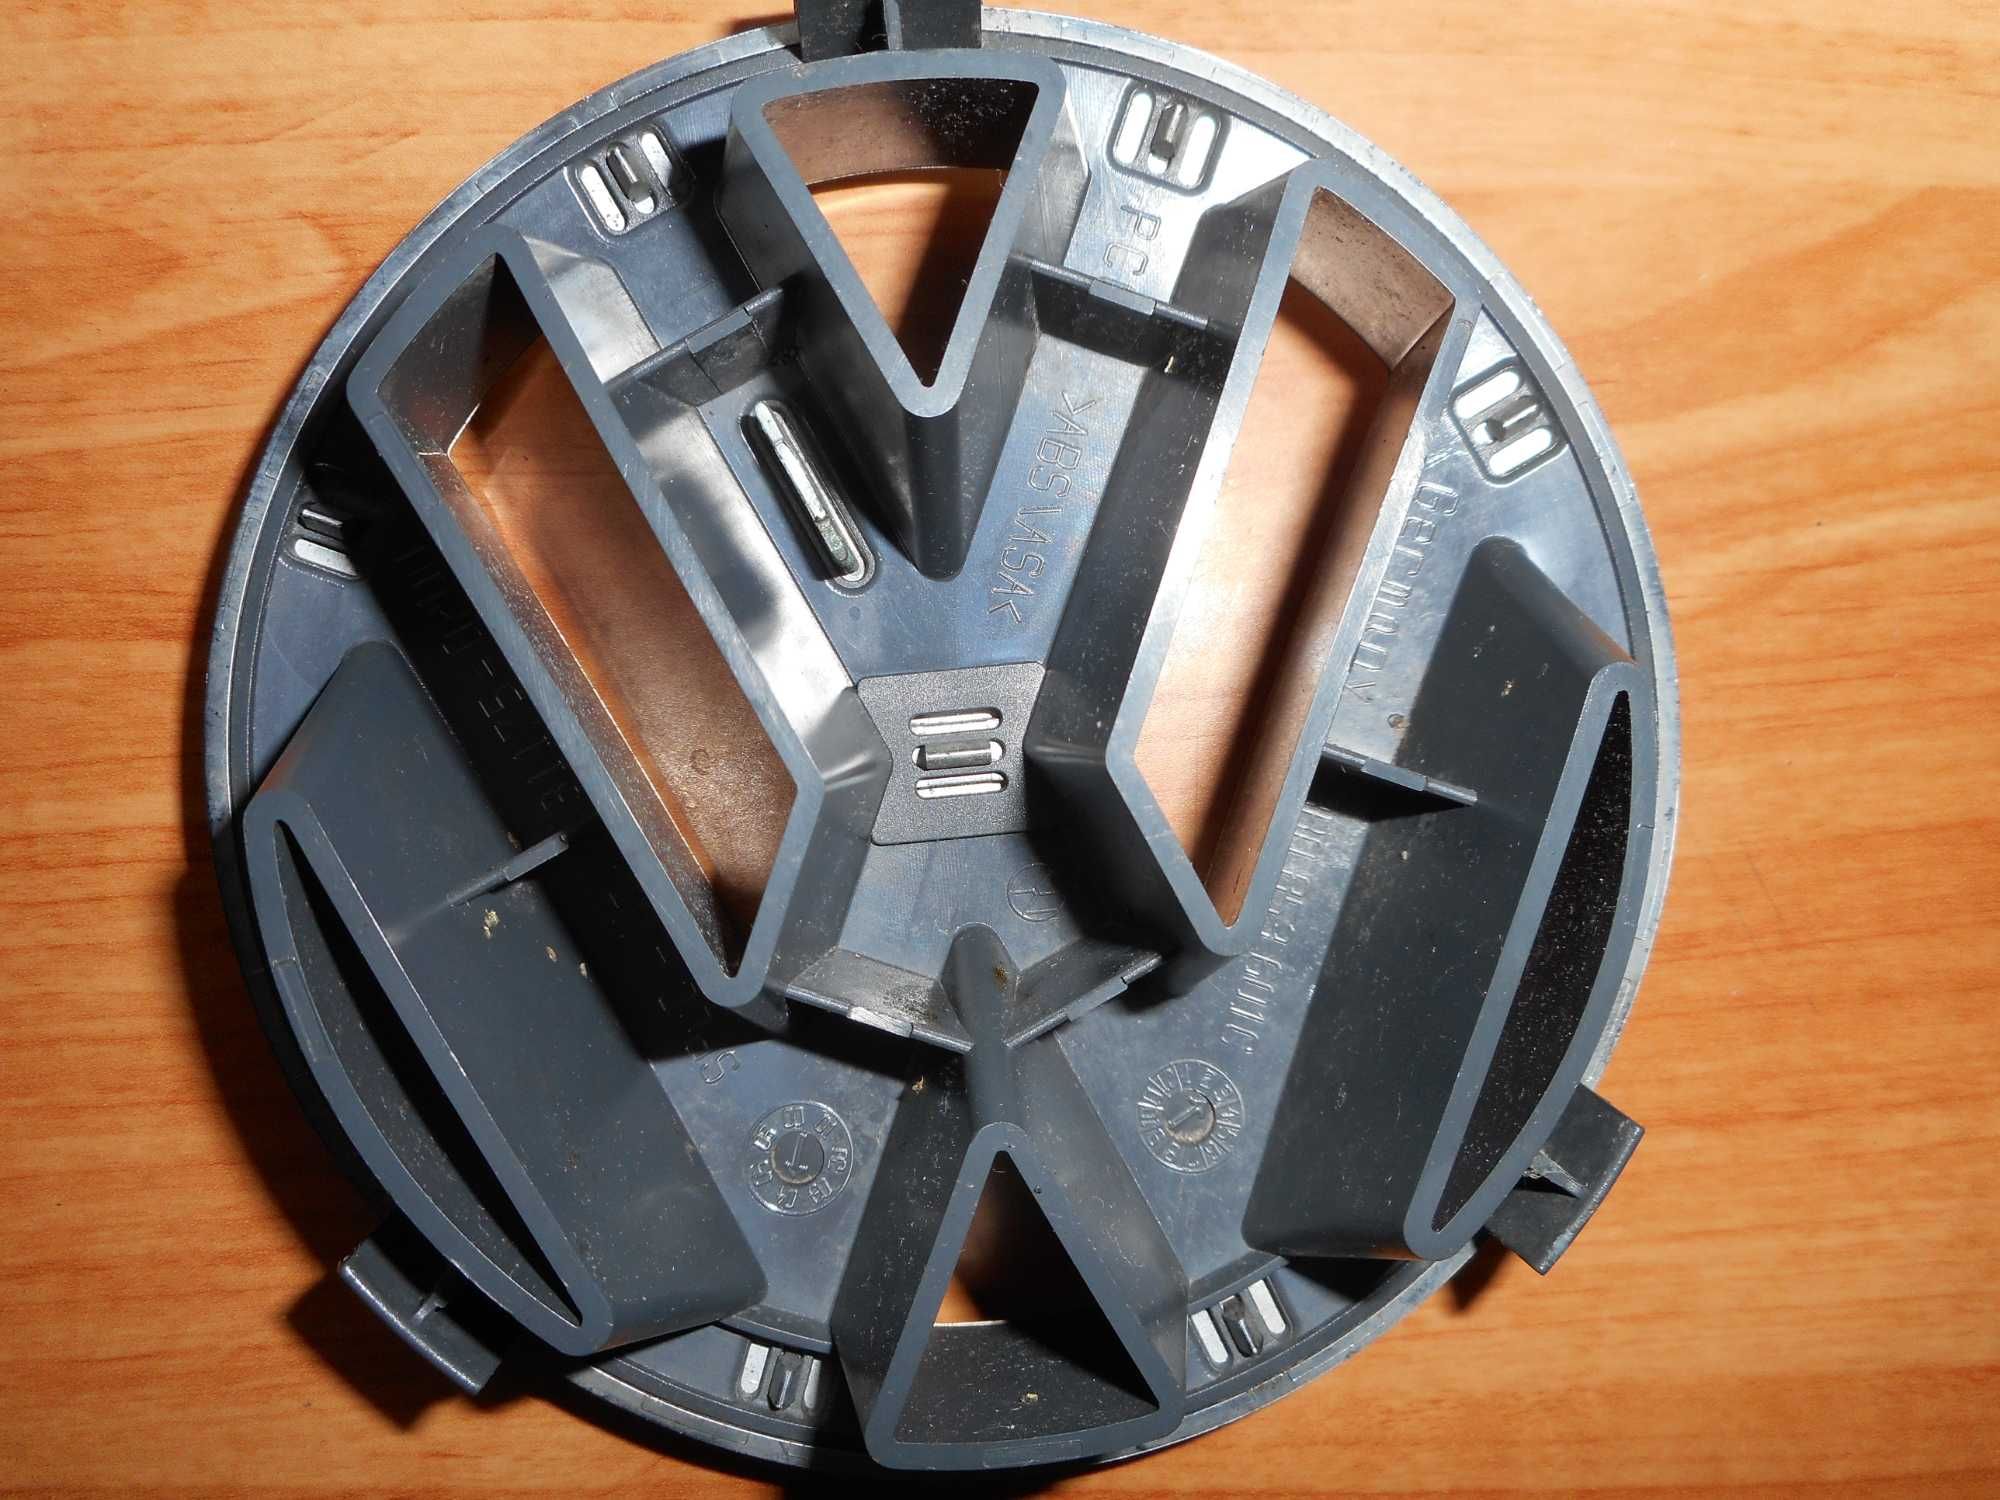 Эмблема значок на решетку радиатора Volkswagen VW,CADDY